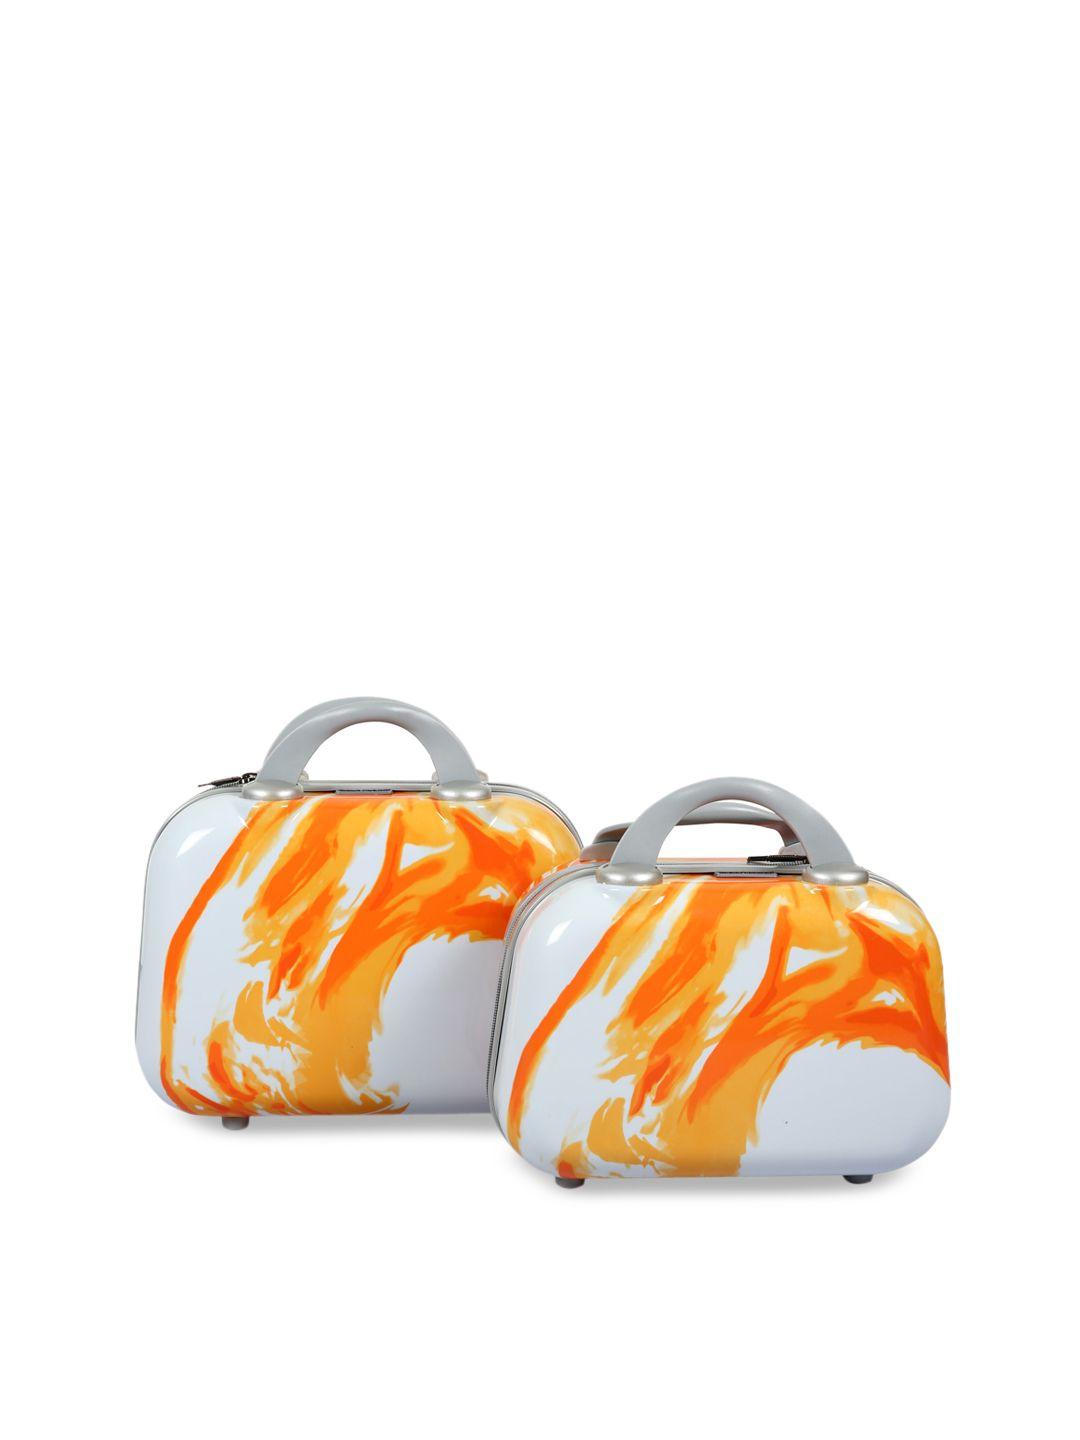 polo class set of 2 orange & white travel luggage vanity bag